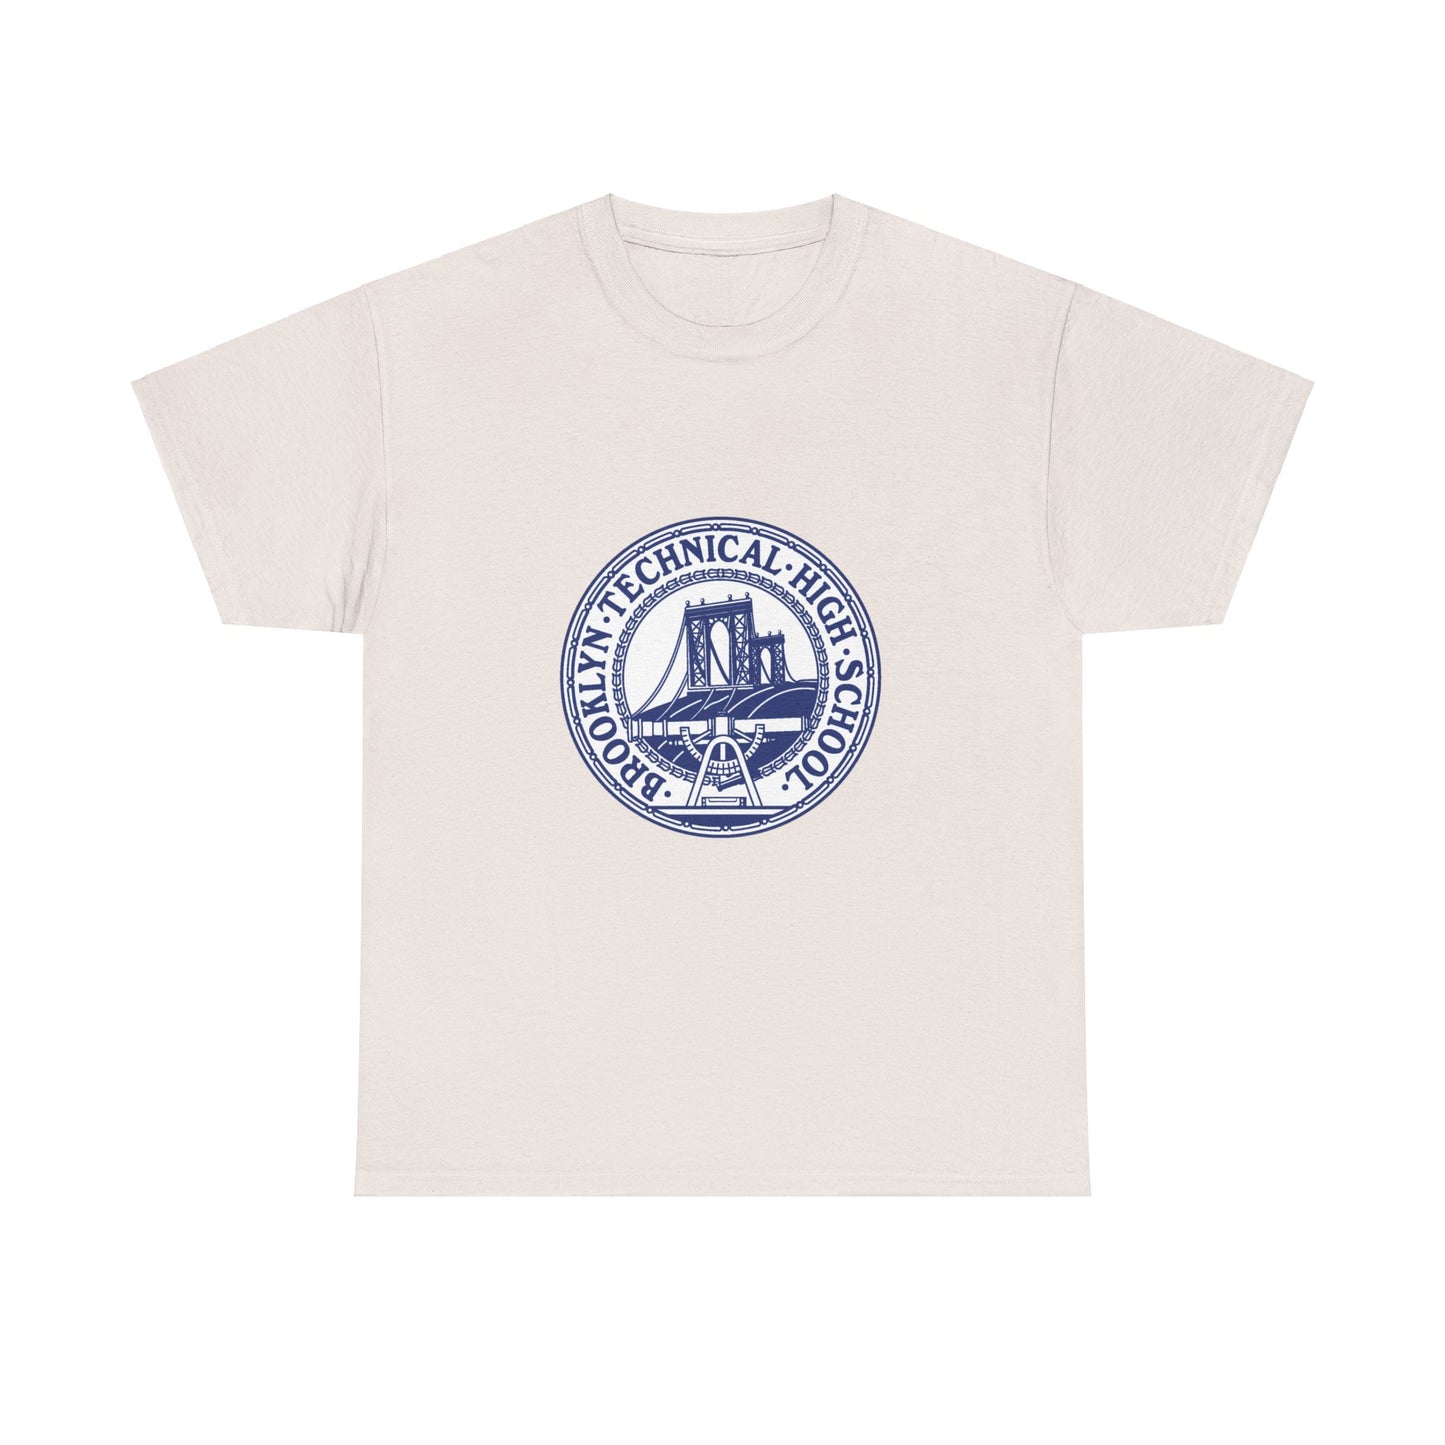 Classic Tech Seal - W/ Background - Men's Heavy Cotton T-Shirt